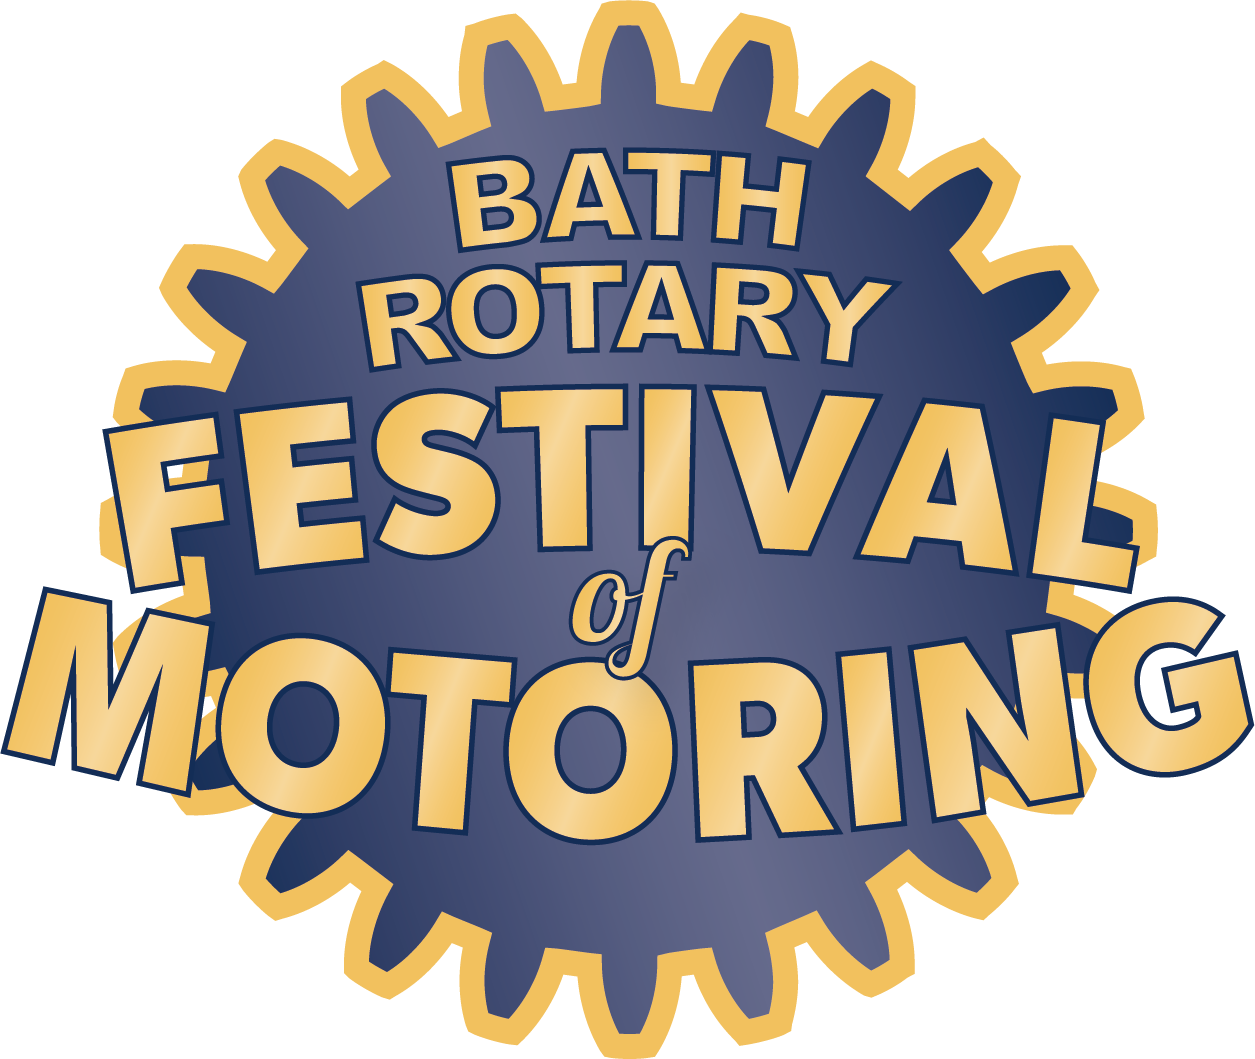 www.bathfestivalofmotoring.com